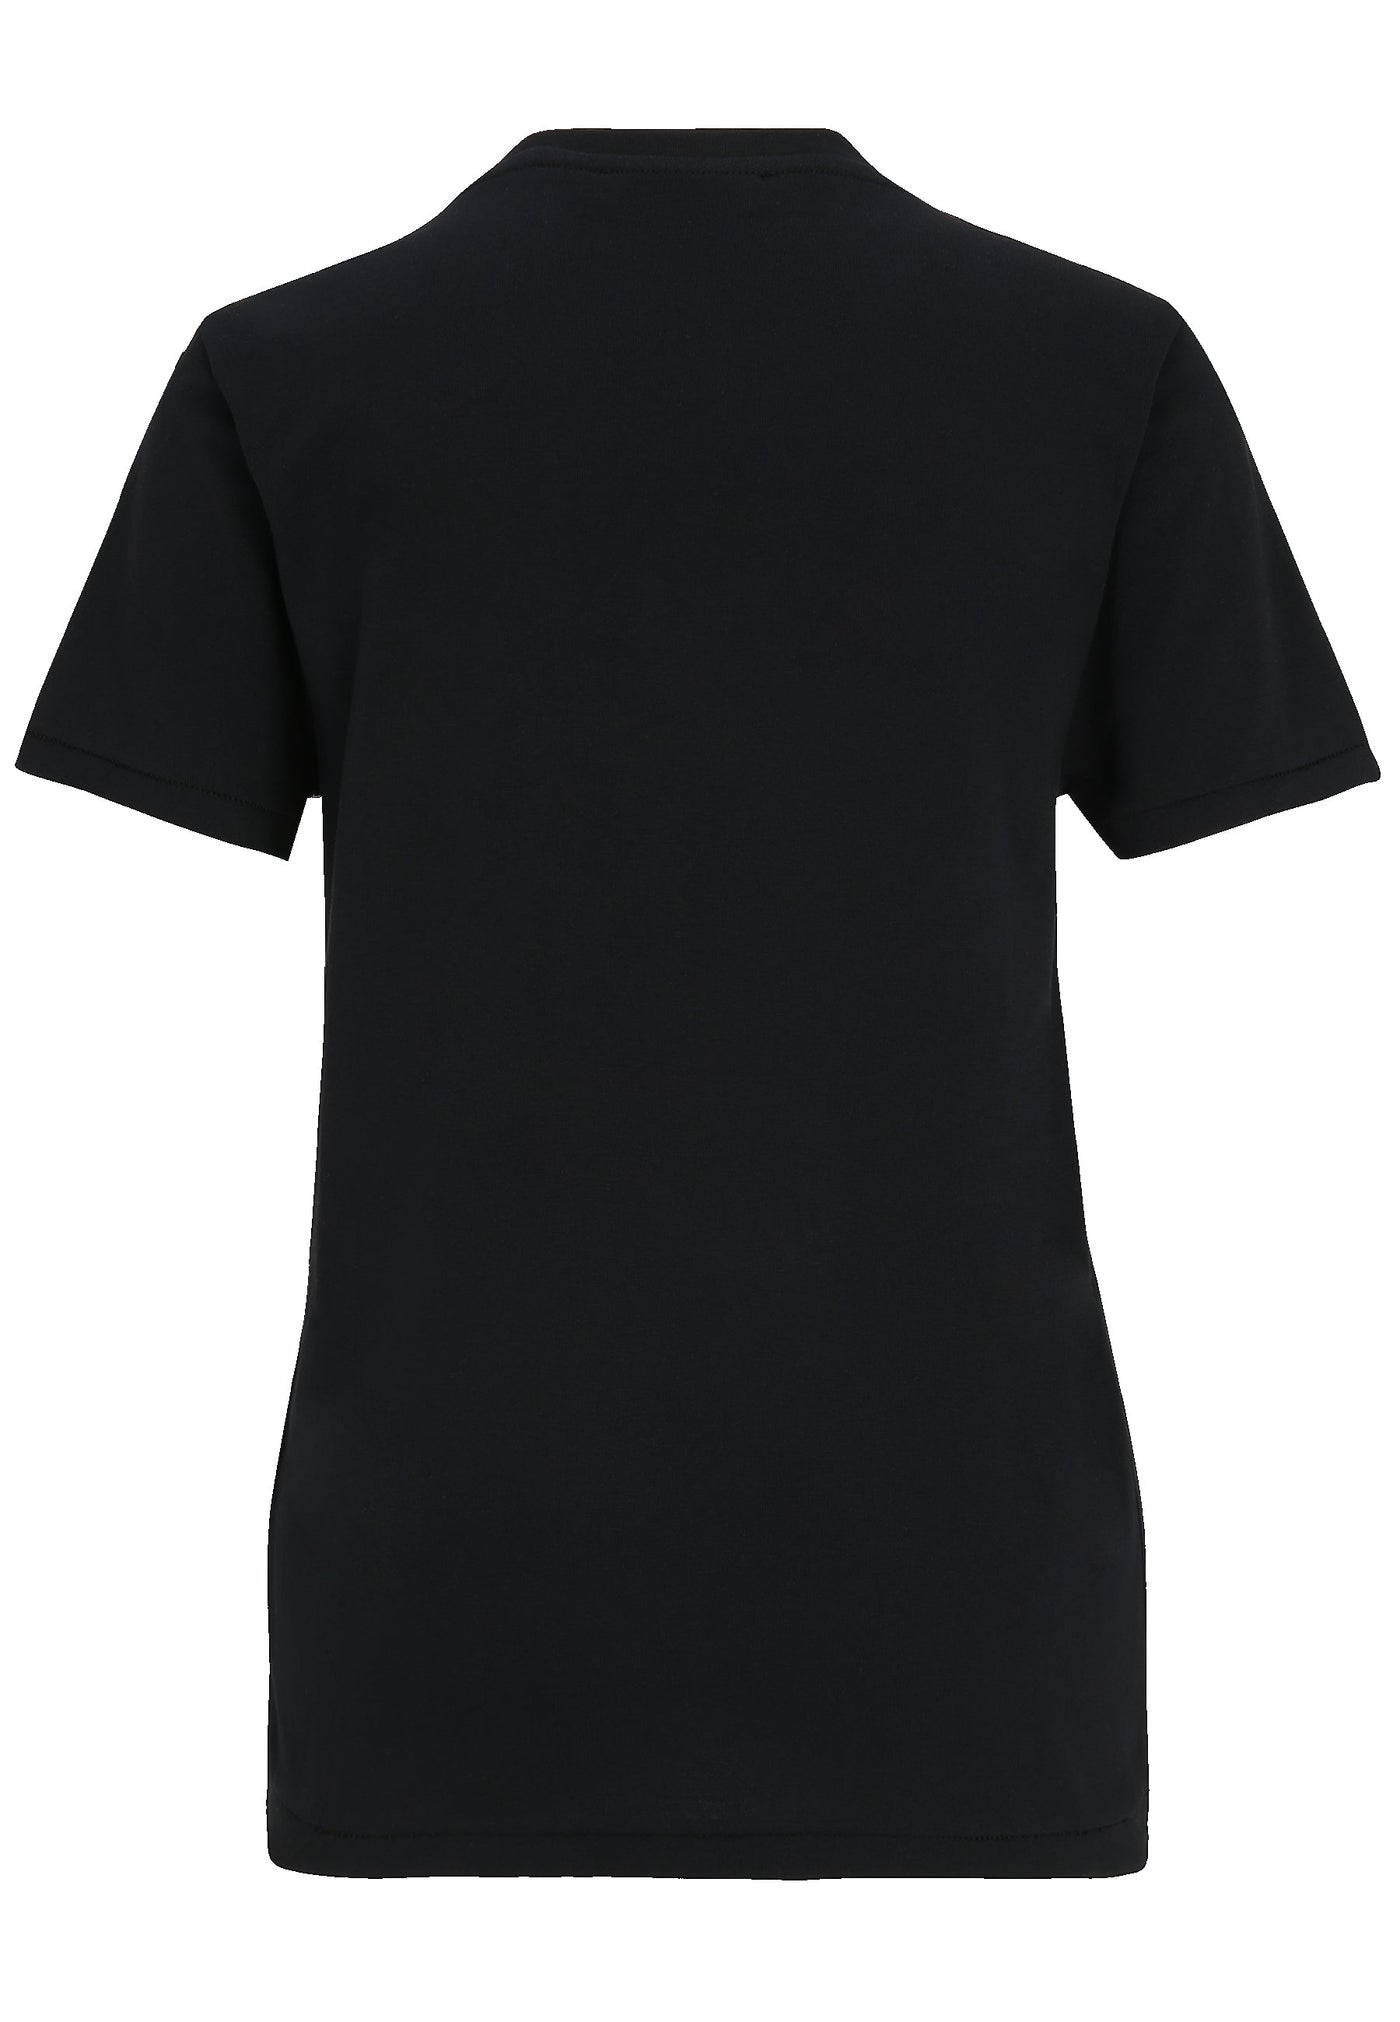 Adria Round Neck Plain Tee in Black Beauty T-Shirts Tamaris   